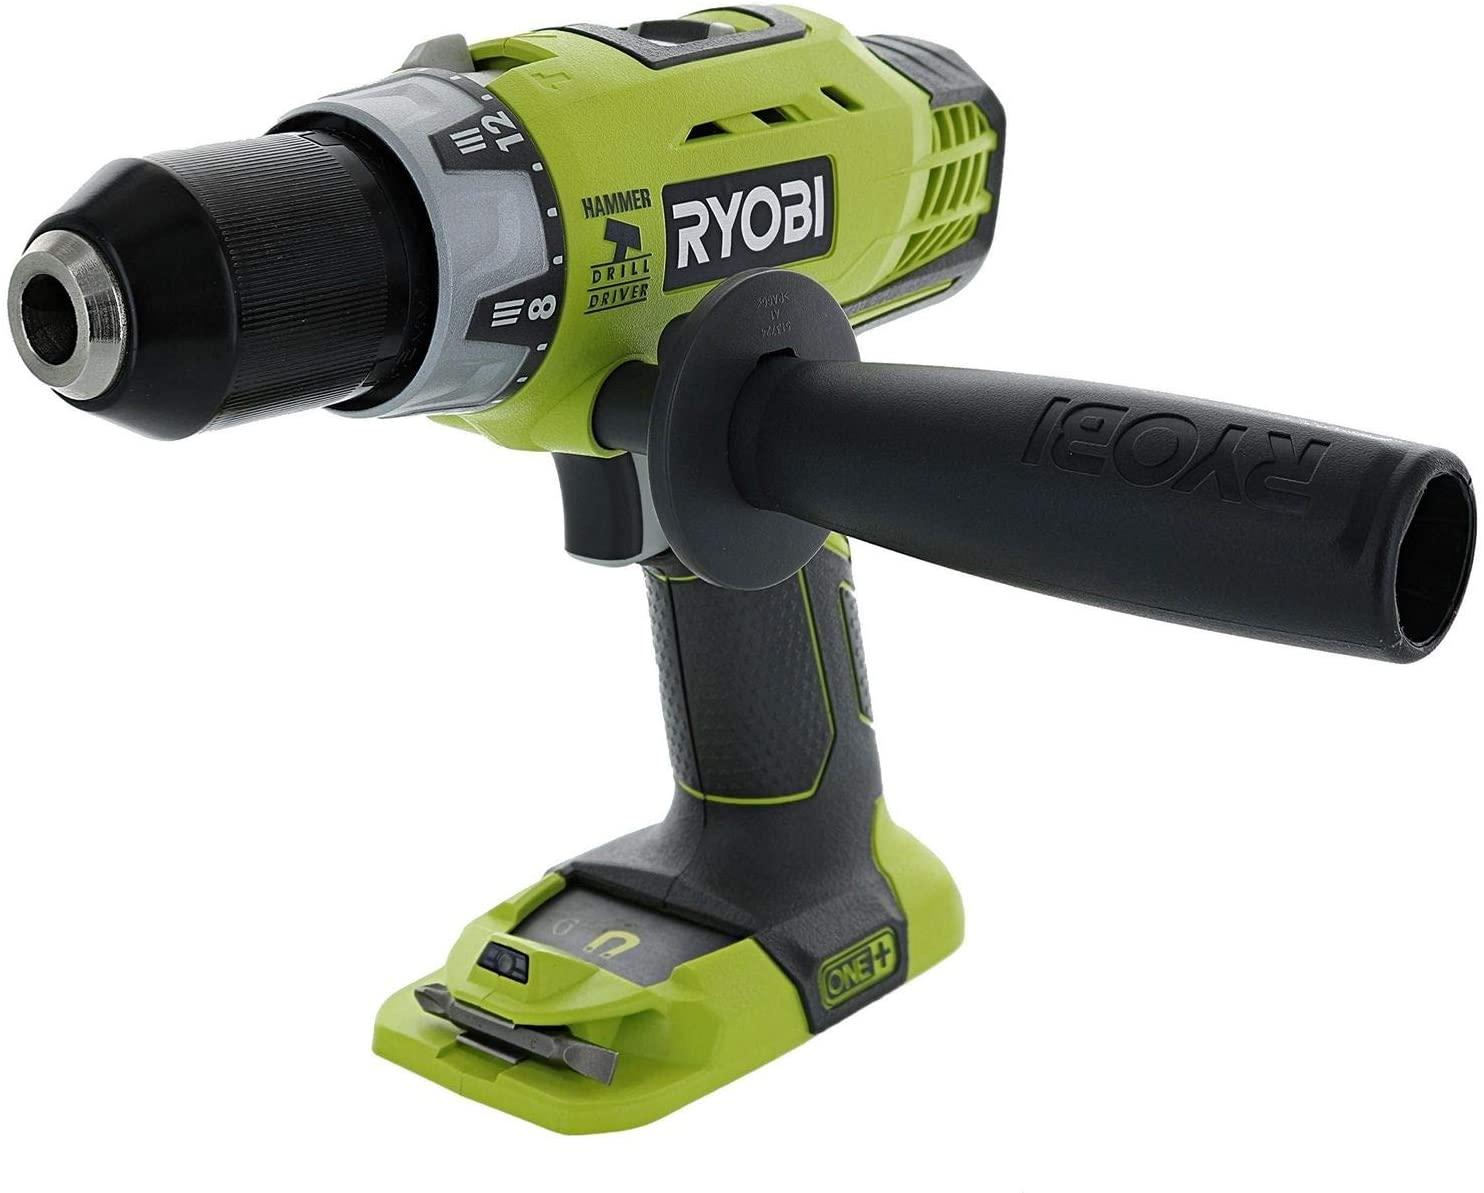 Ryobi ONE+ 18V Cordless 1/2 Hammer Drill/Driver for $39.97 Shipped